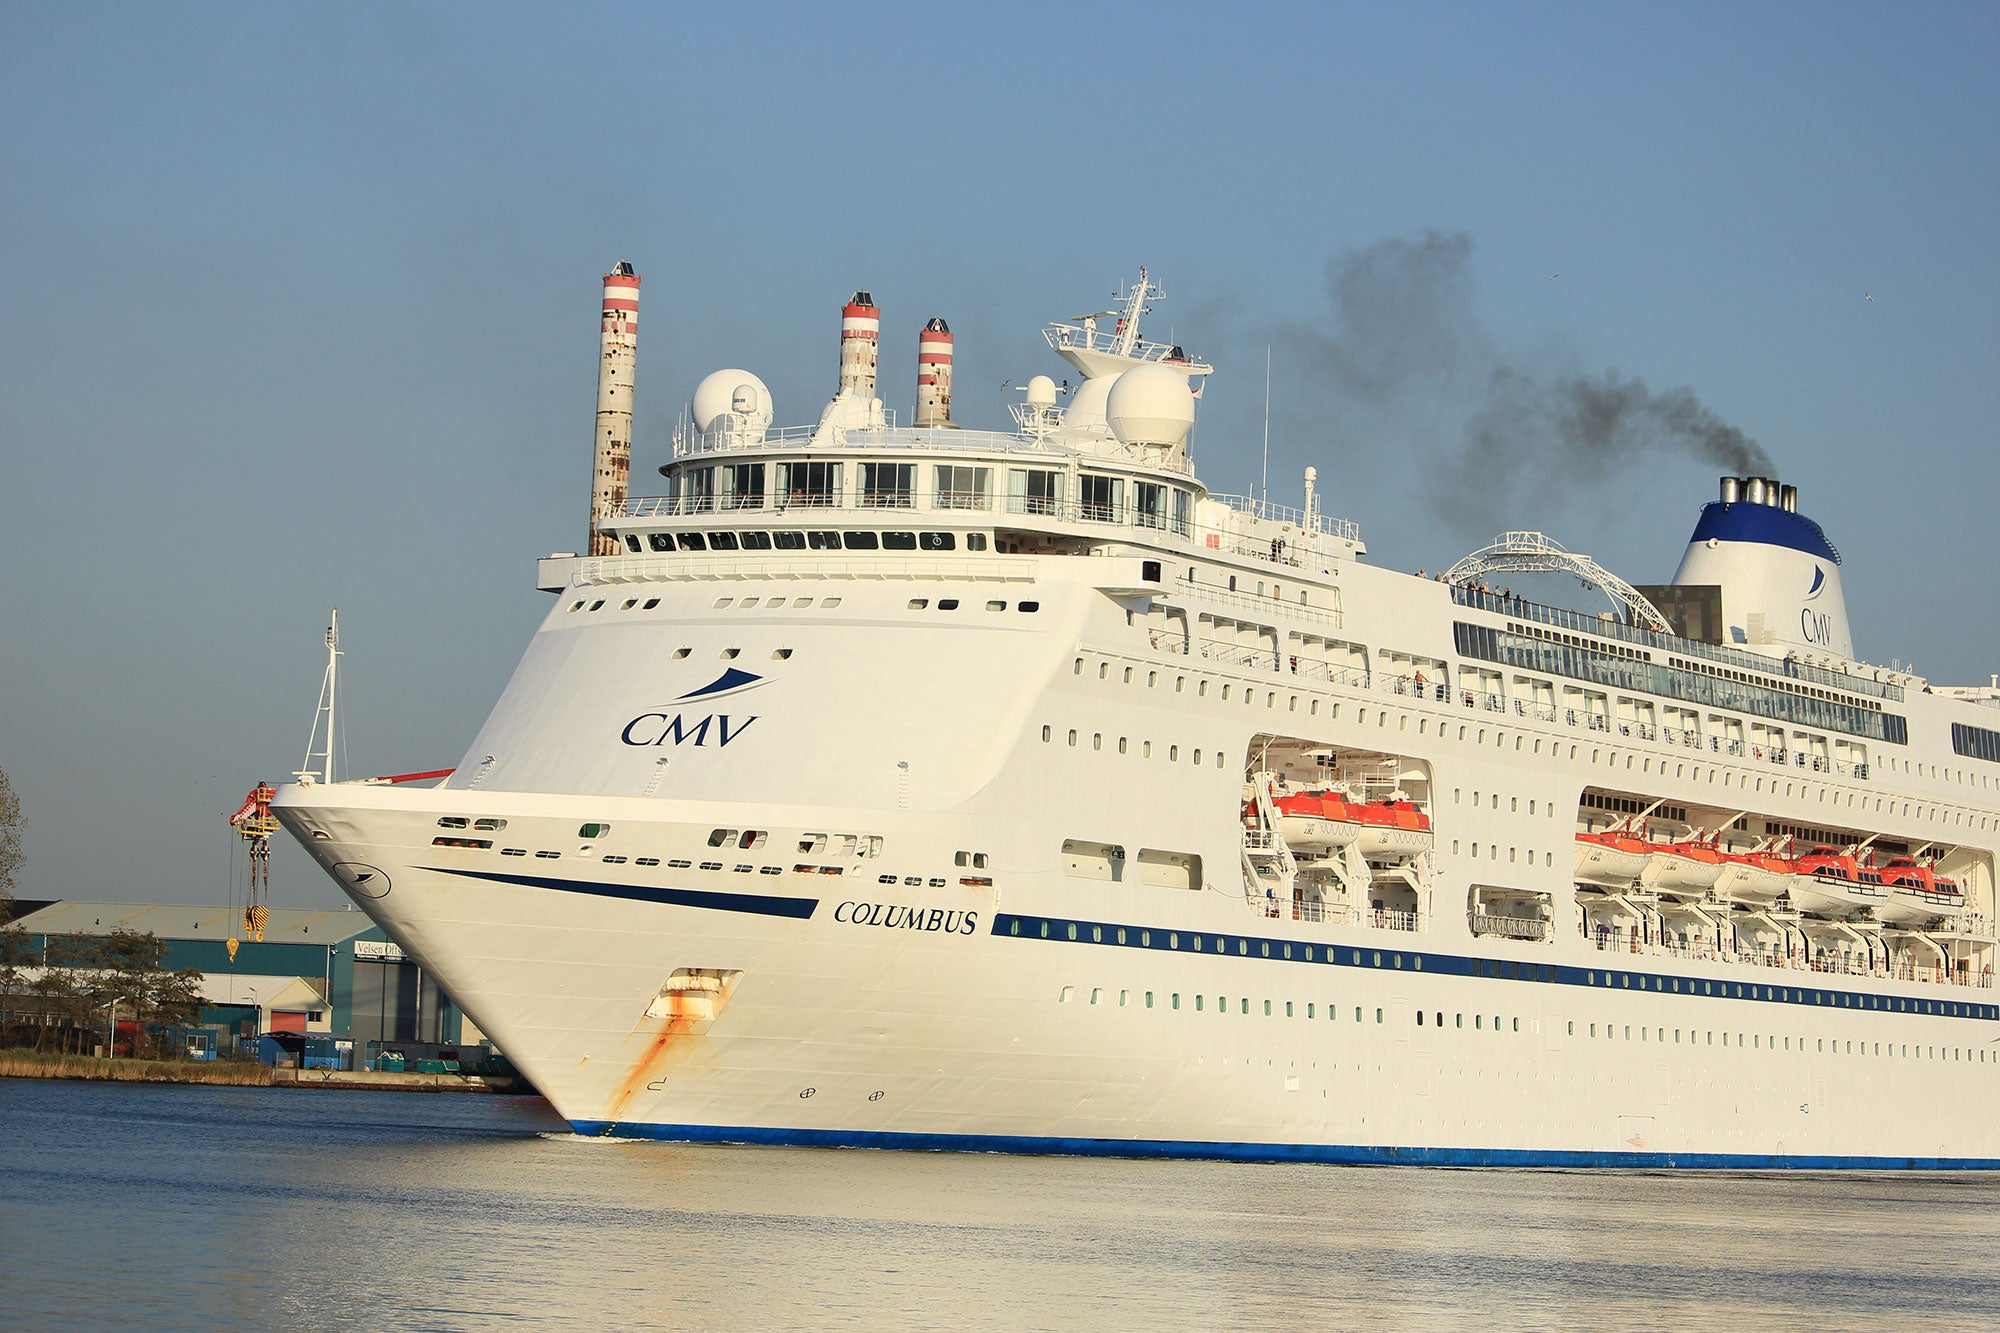 Cruise & maritime Voyages' Columbus